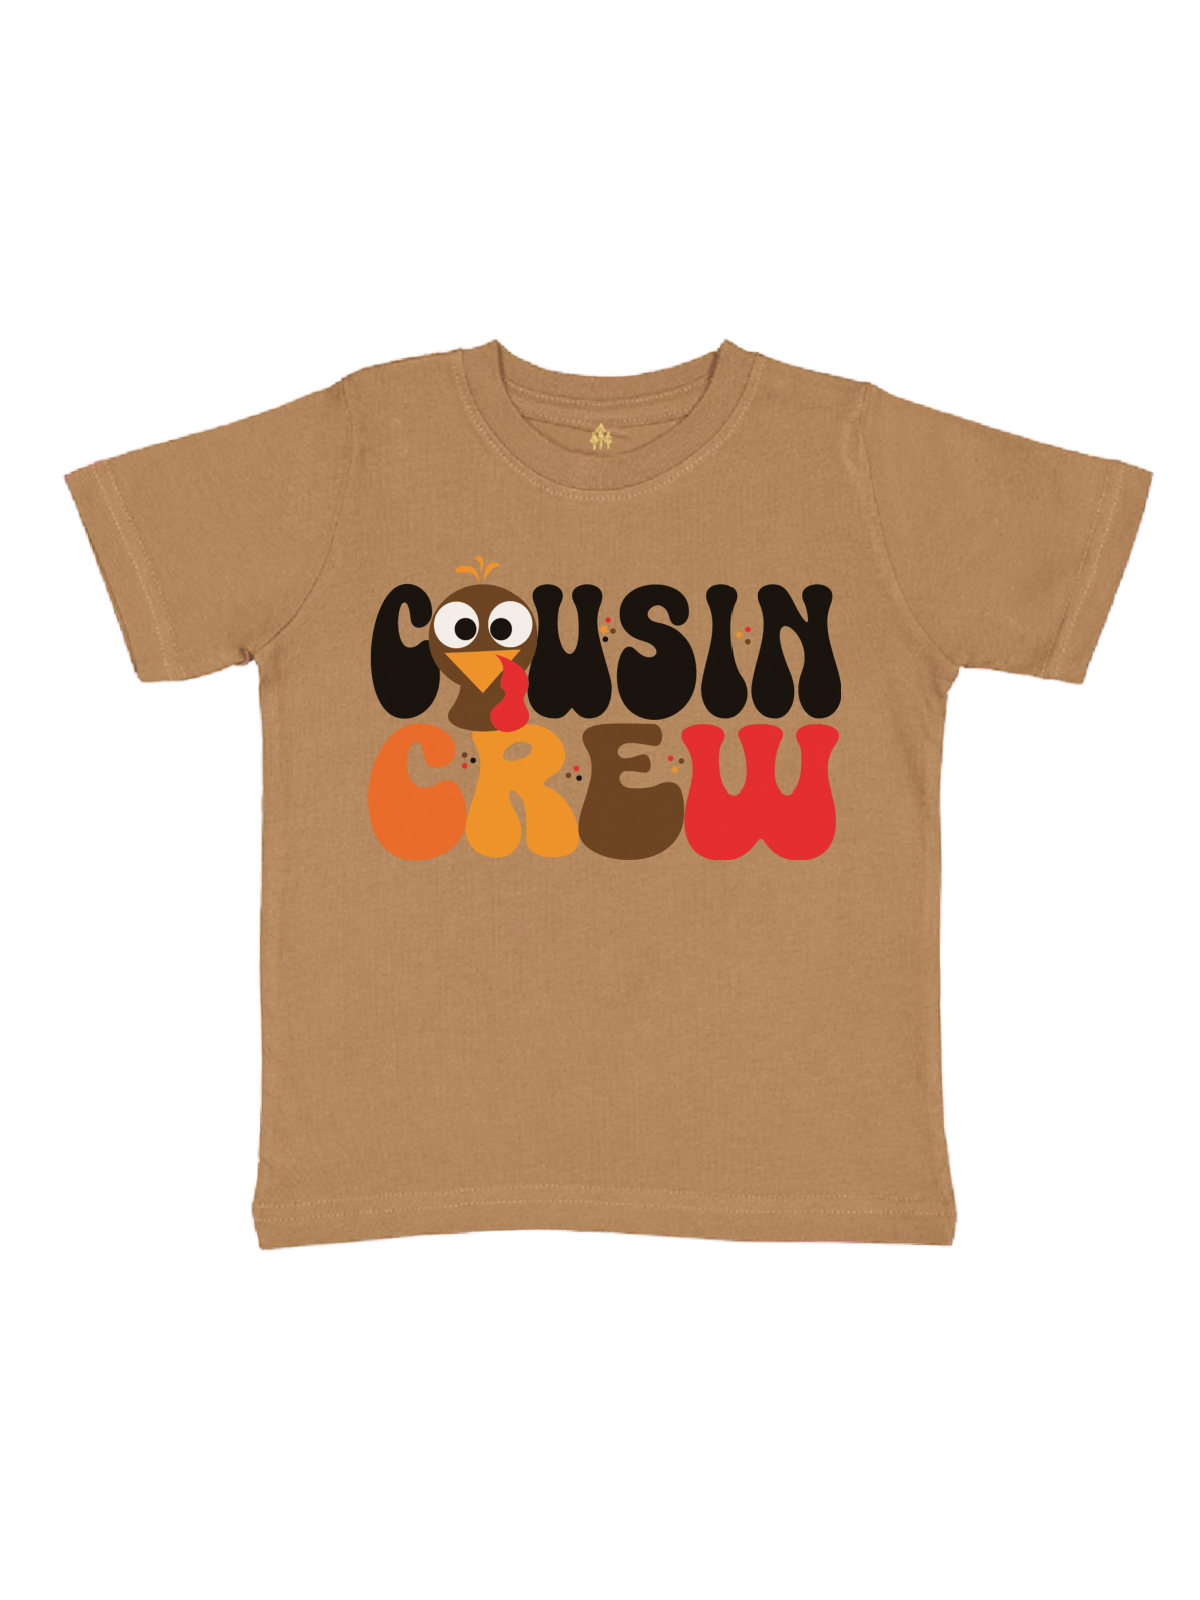 Cousin Crew Turkey Face Kids Thanksgiving Shirt